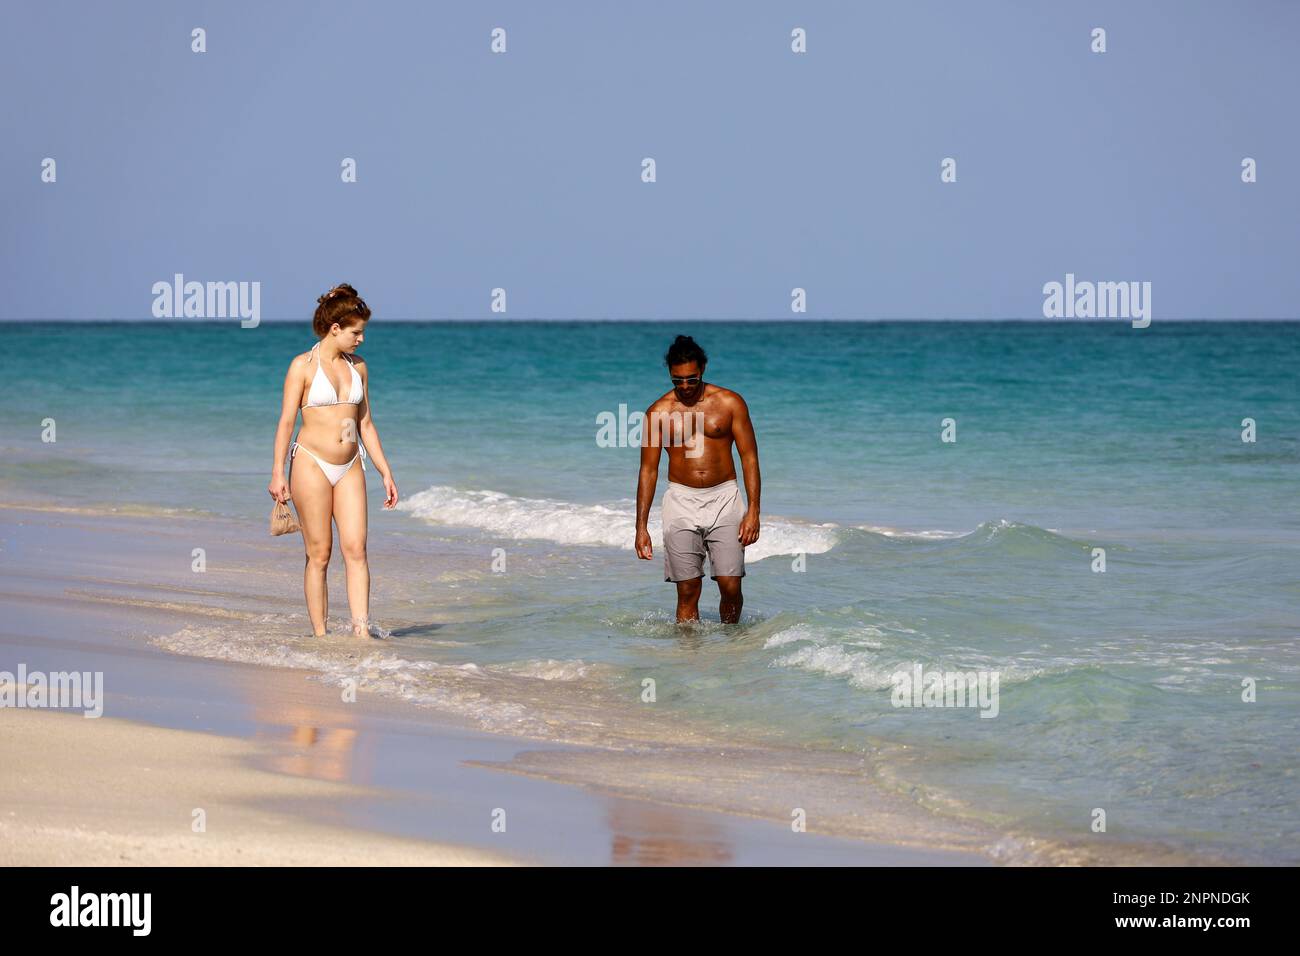 Interracial couple on a beach, white woman in bikini and black man walking in ocean water Stock Photo